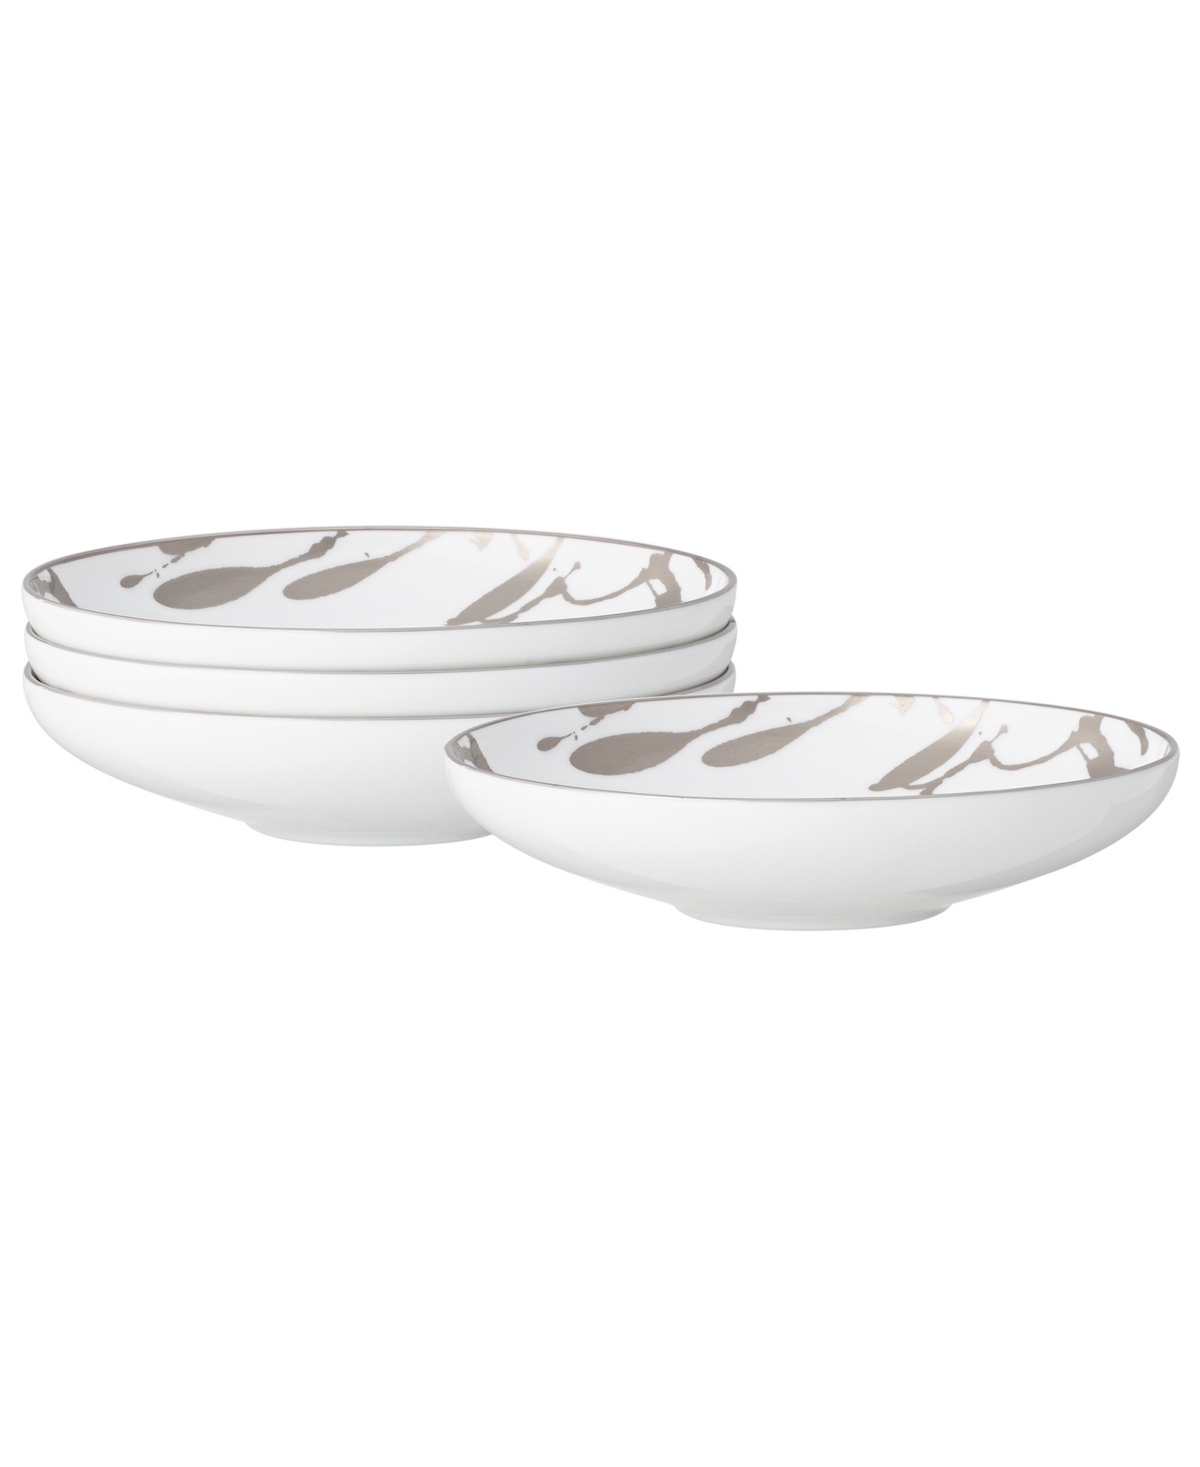 Noritake Raptures Platinum Set Of 4 Fruit Bowls, Service For 4 In White Platinum